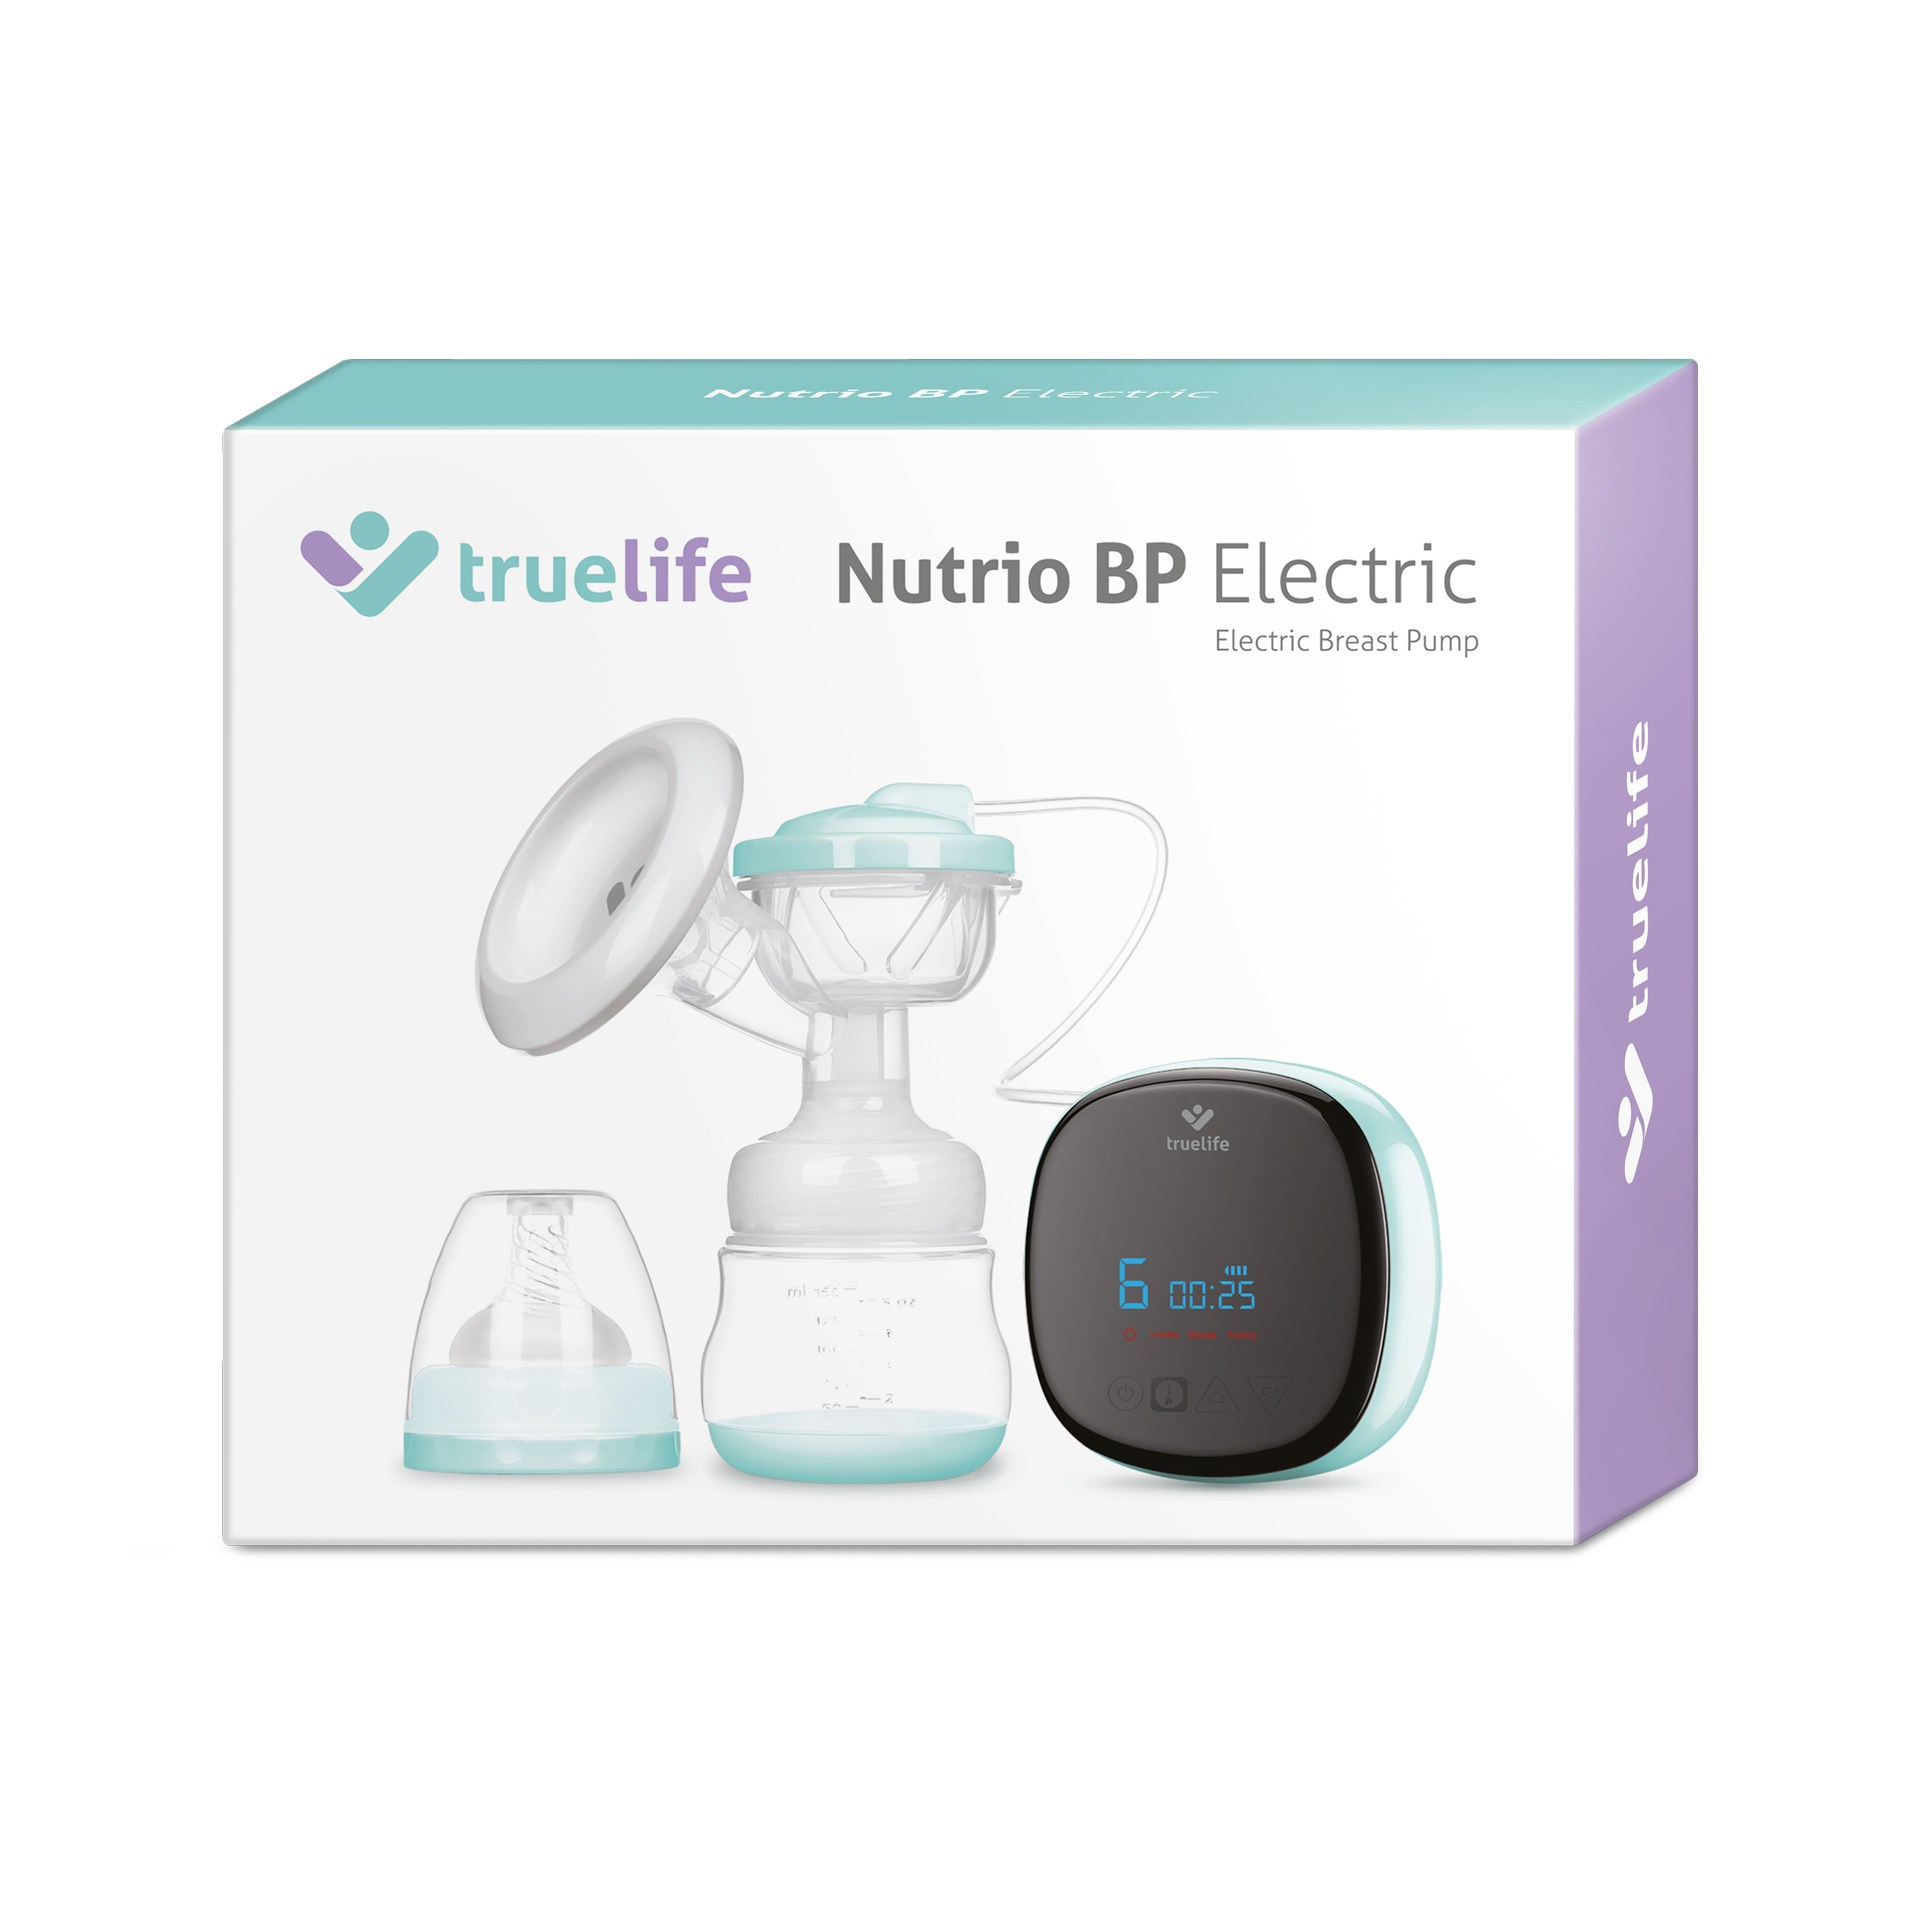 TrueLife Nutrio BP Electric1 